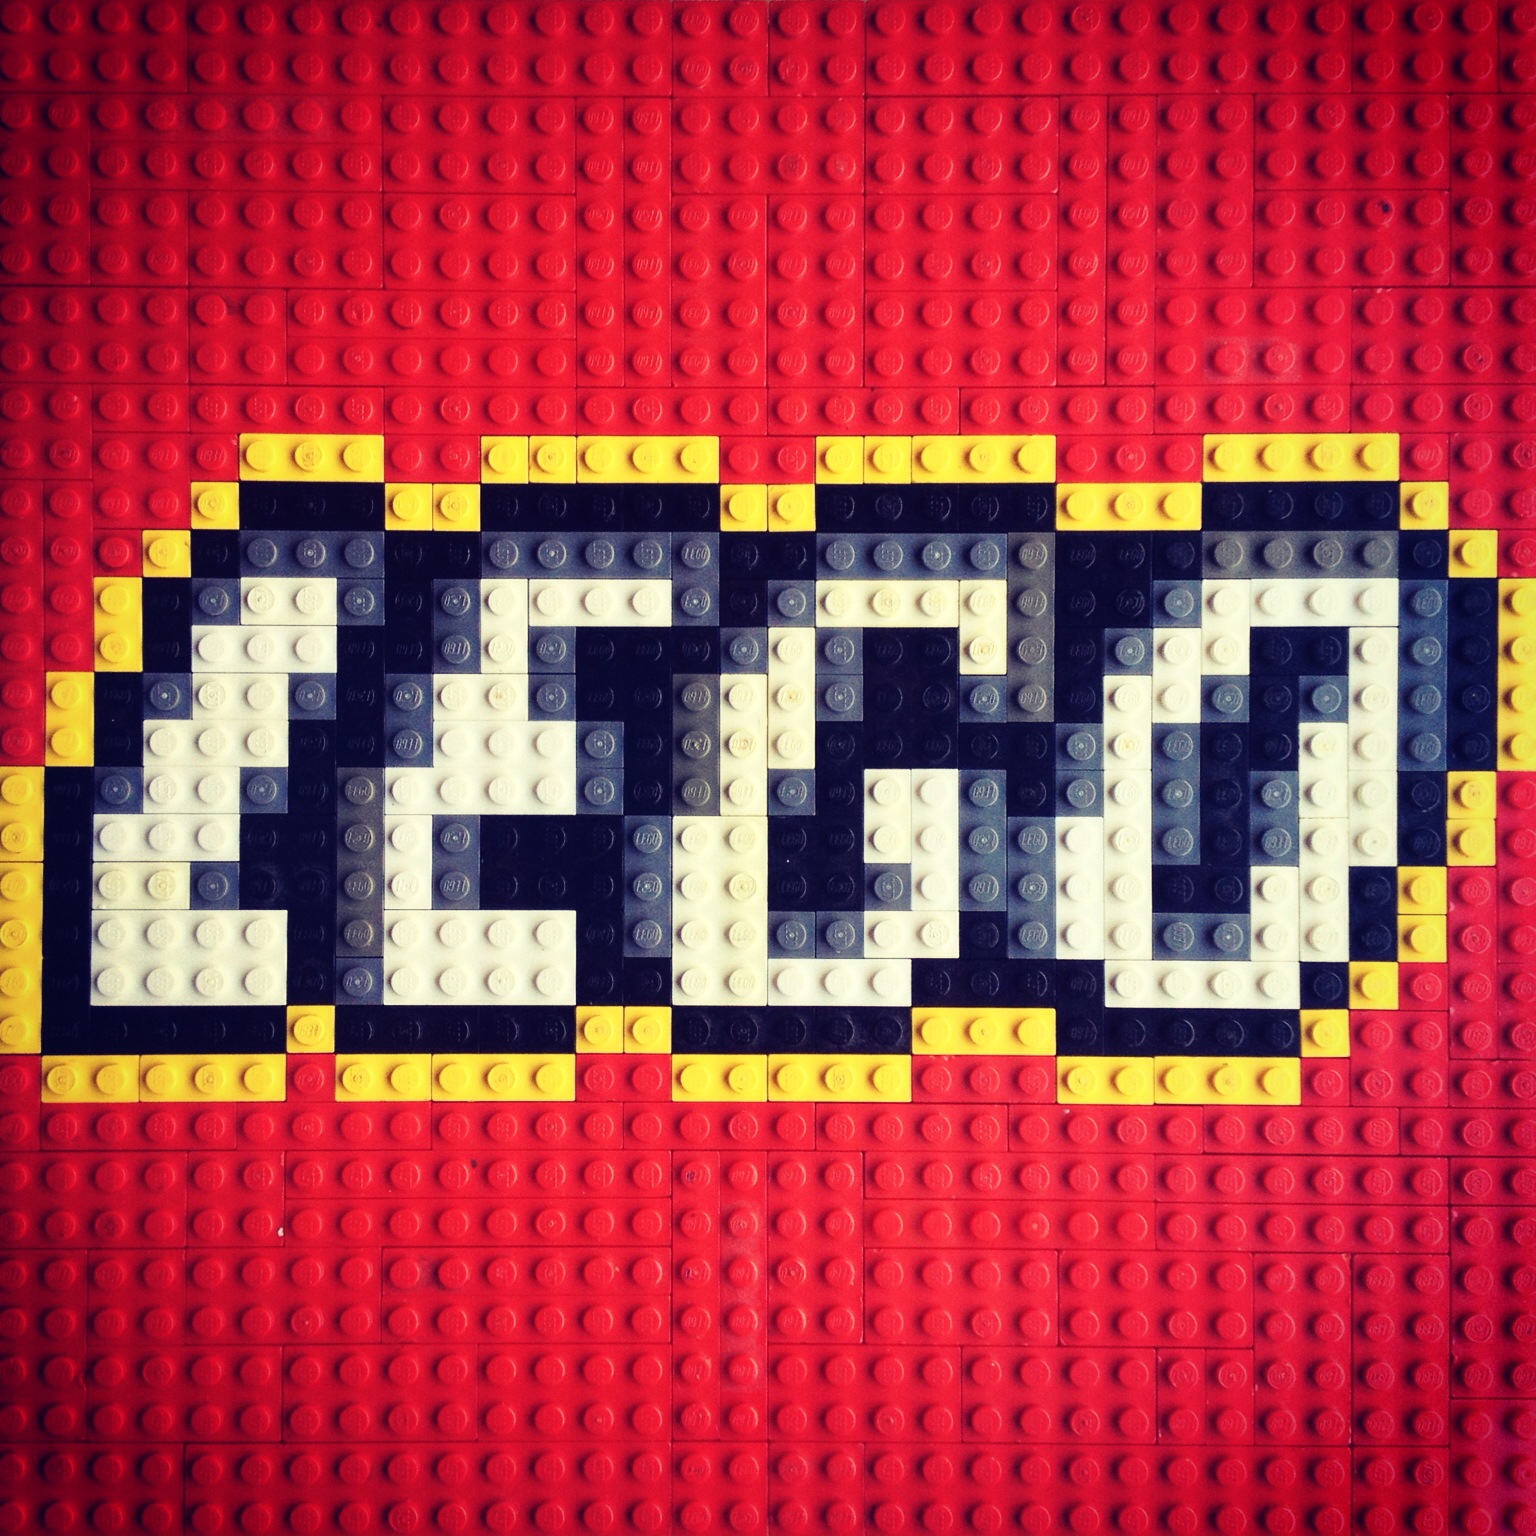 LegoGenre’s Lego Powerful Brand Mosaic